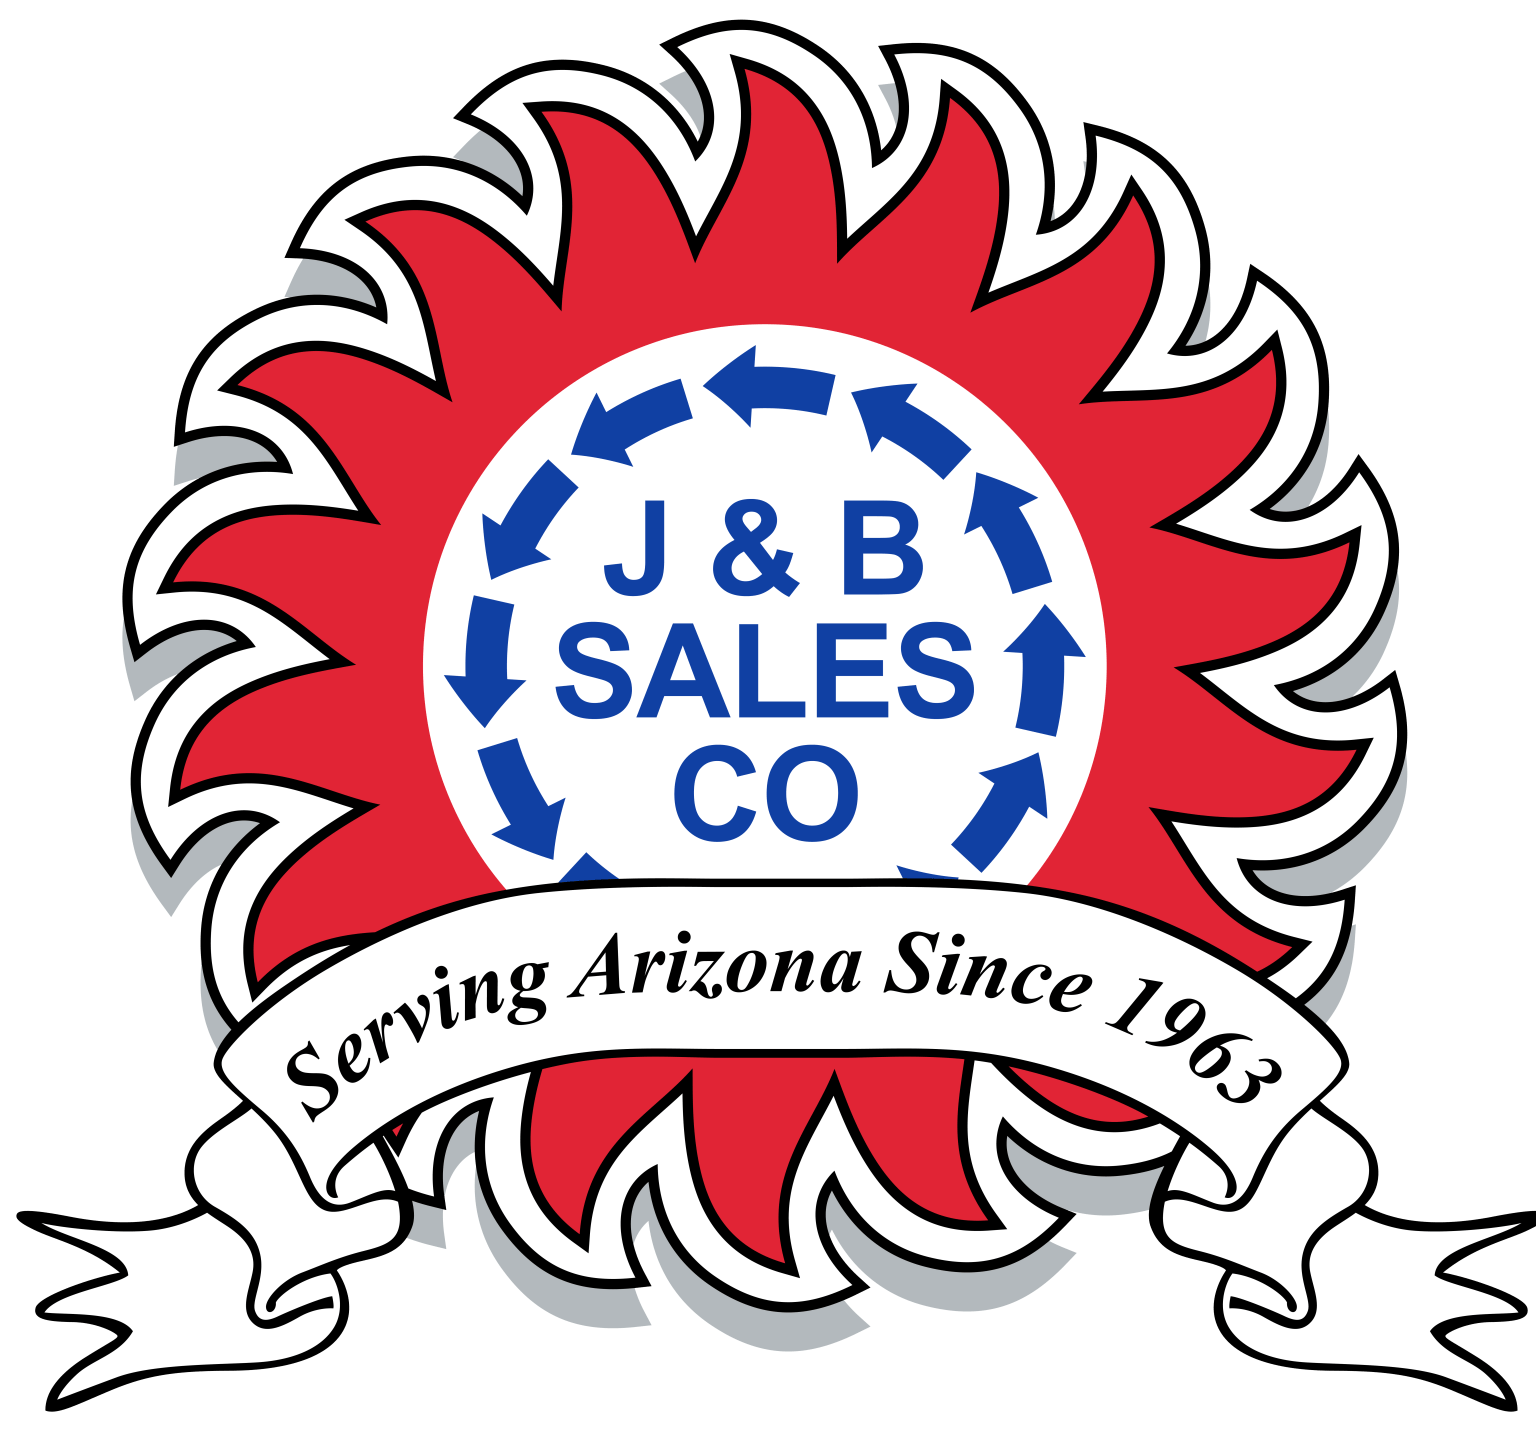 a logo for j & b sales co serving arizona since 1963